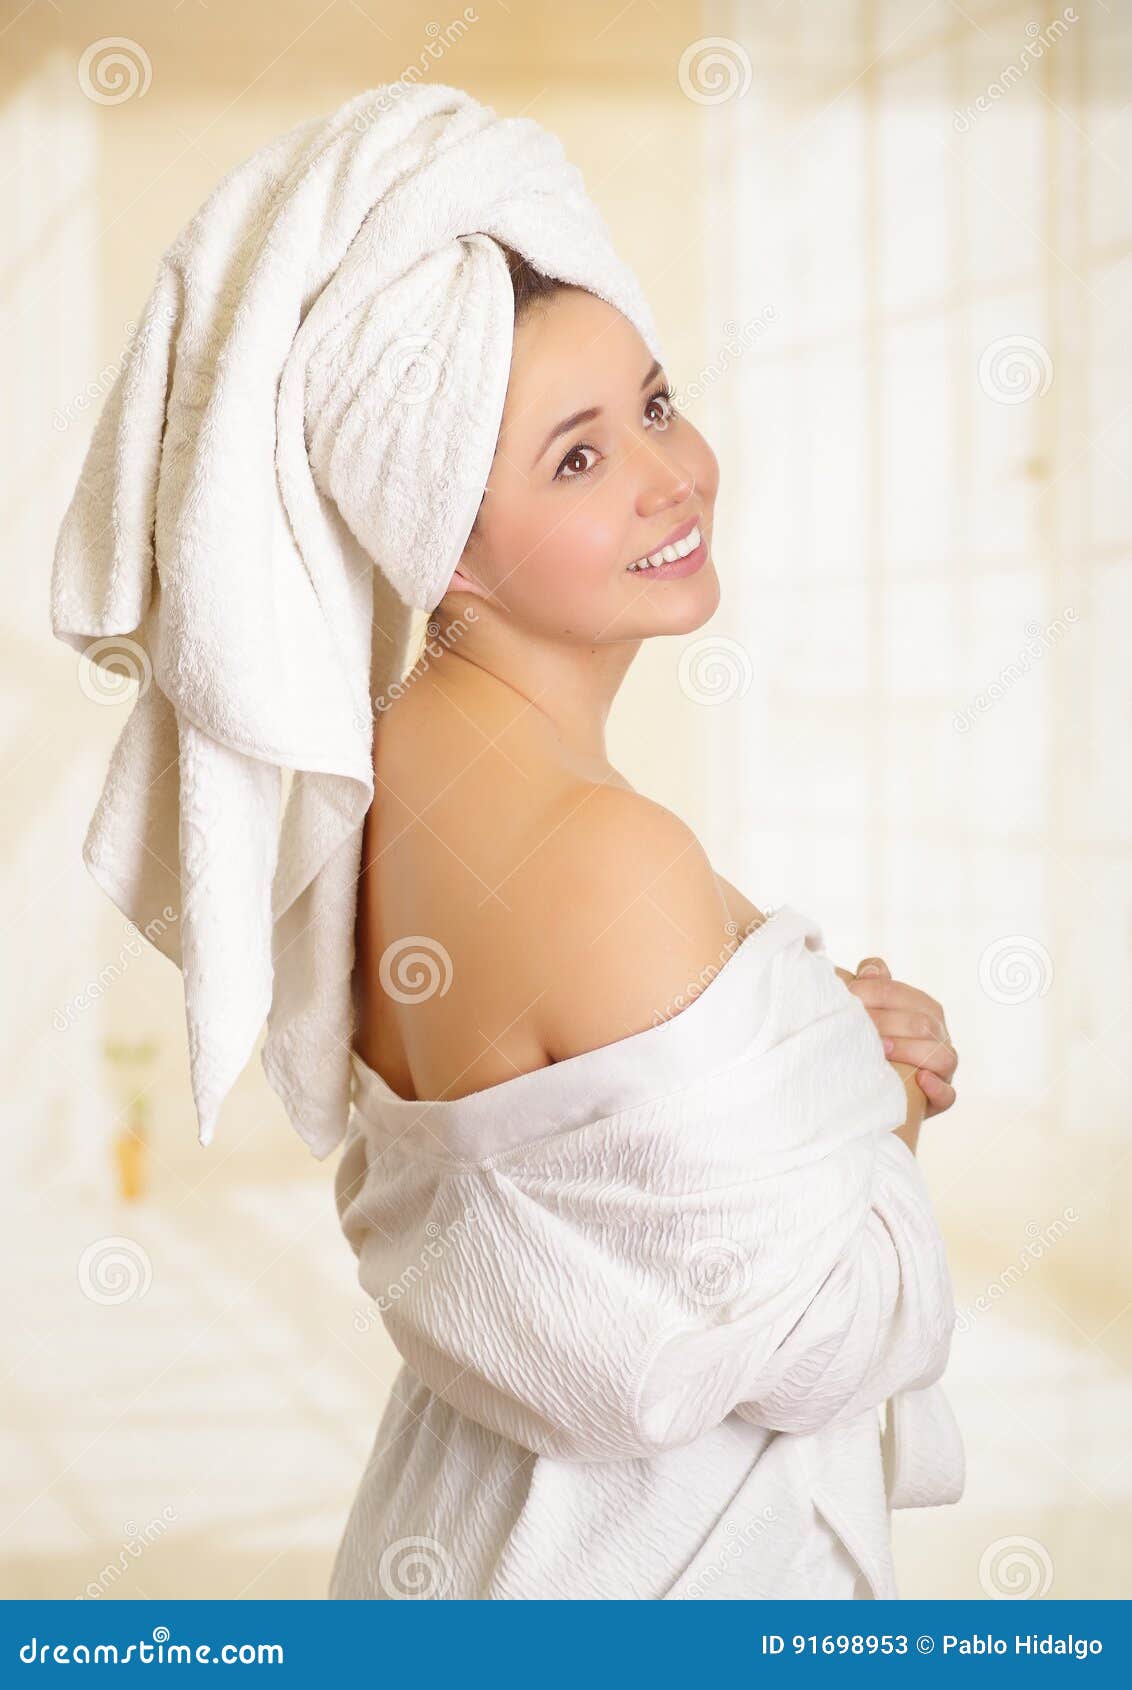 Прикрылась полотенцем. Женщина в полотенце. Девушка с полотенцем в руках. Девушка в белом полотенце. Девушка с полотенцем на голове.